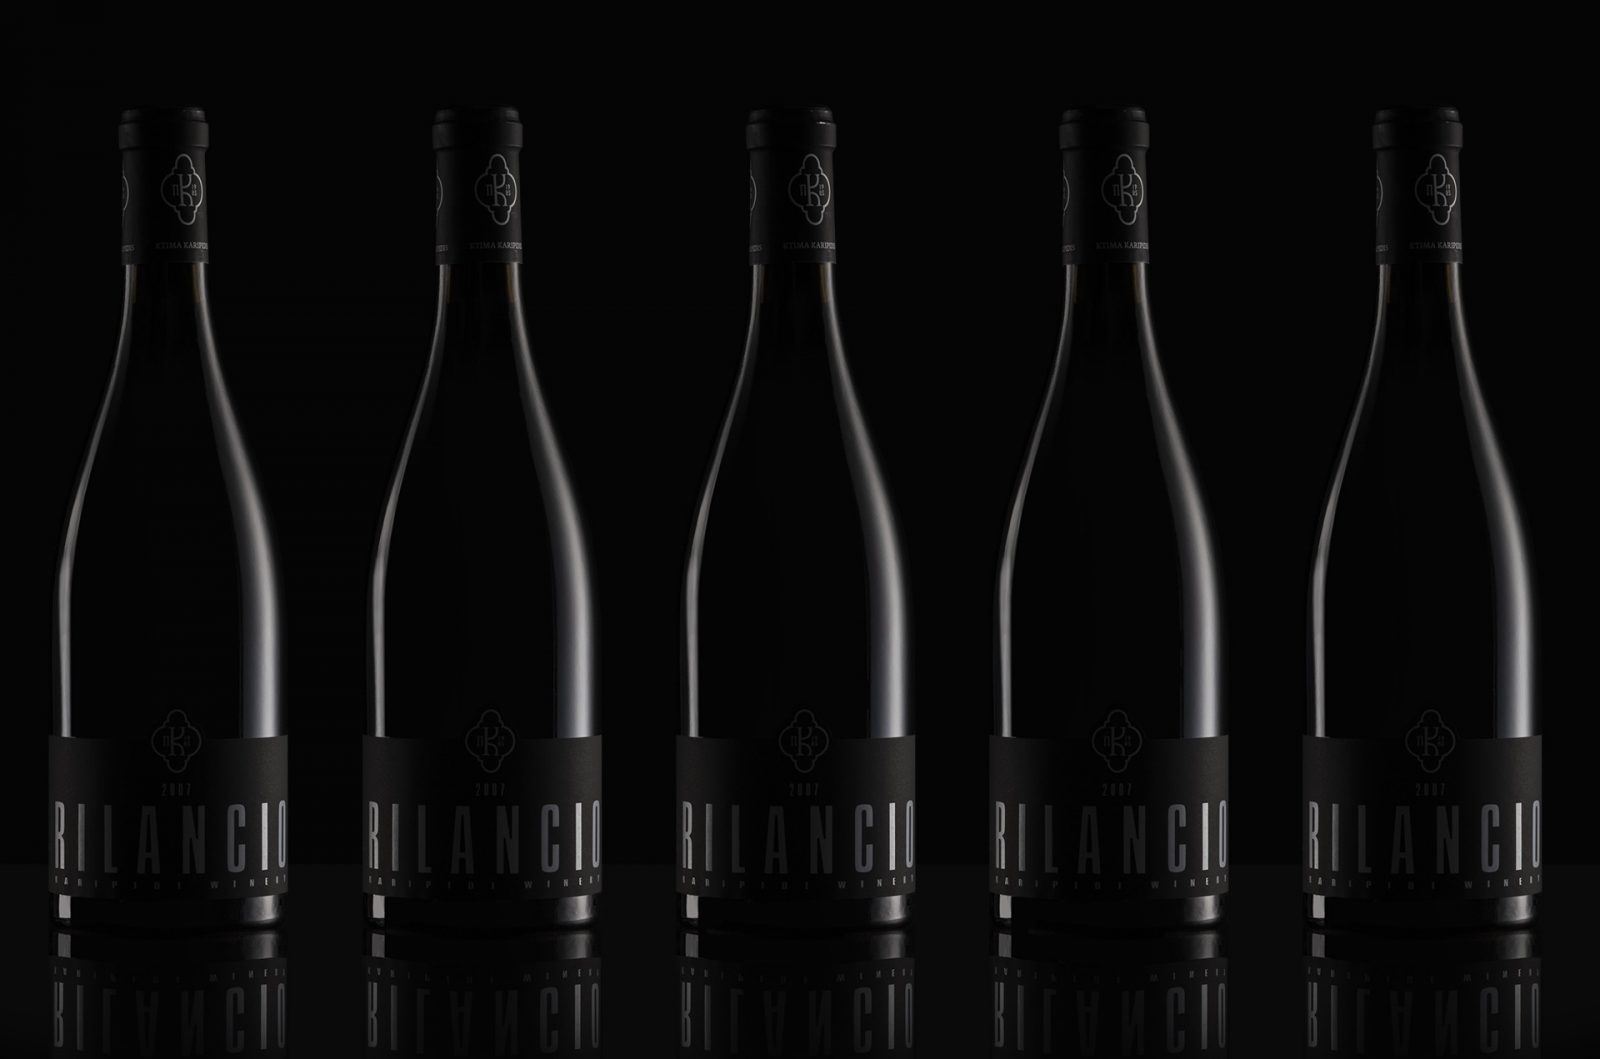 Rilancio Wine Label Design for Karipidis Winery by Sowl Creative Studio